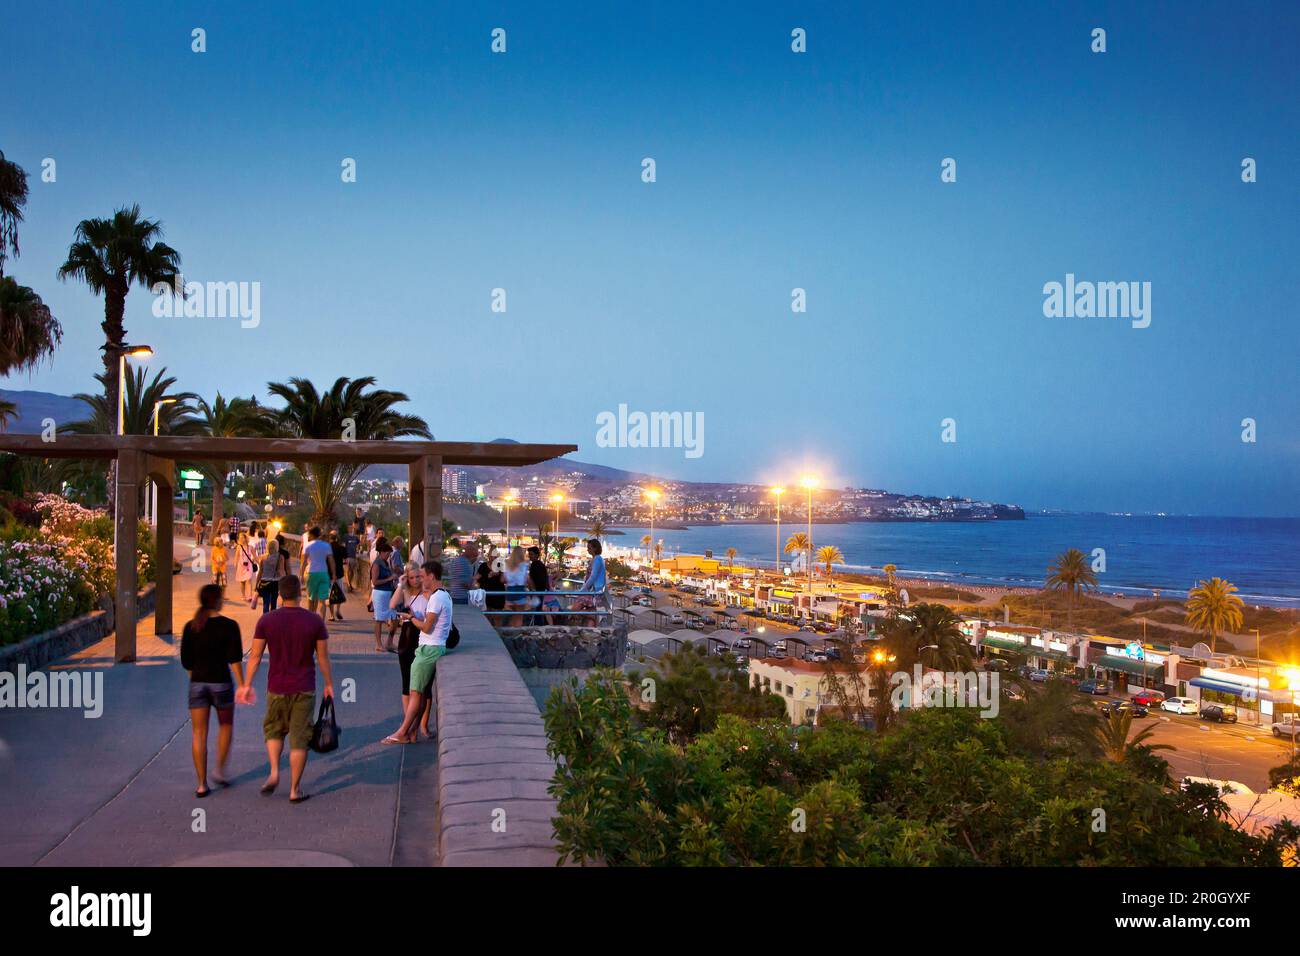 Promenade, Playa del Ingles, Gran Canaria, Canary Islands, Spain Stock Photo